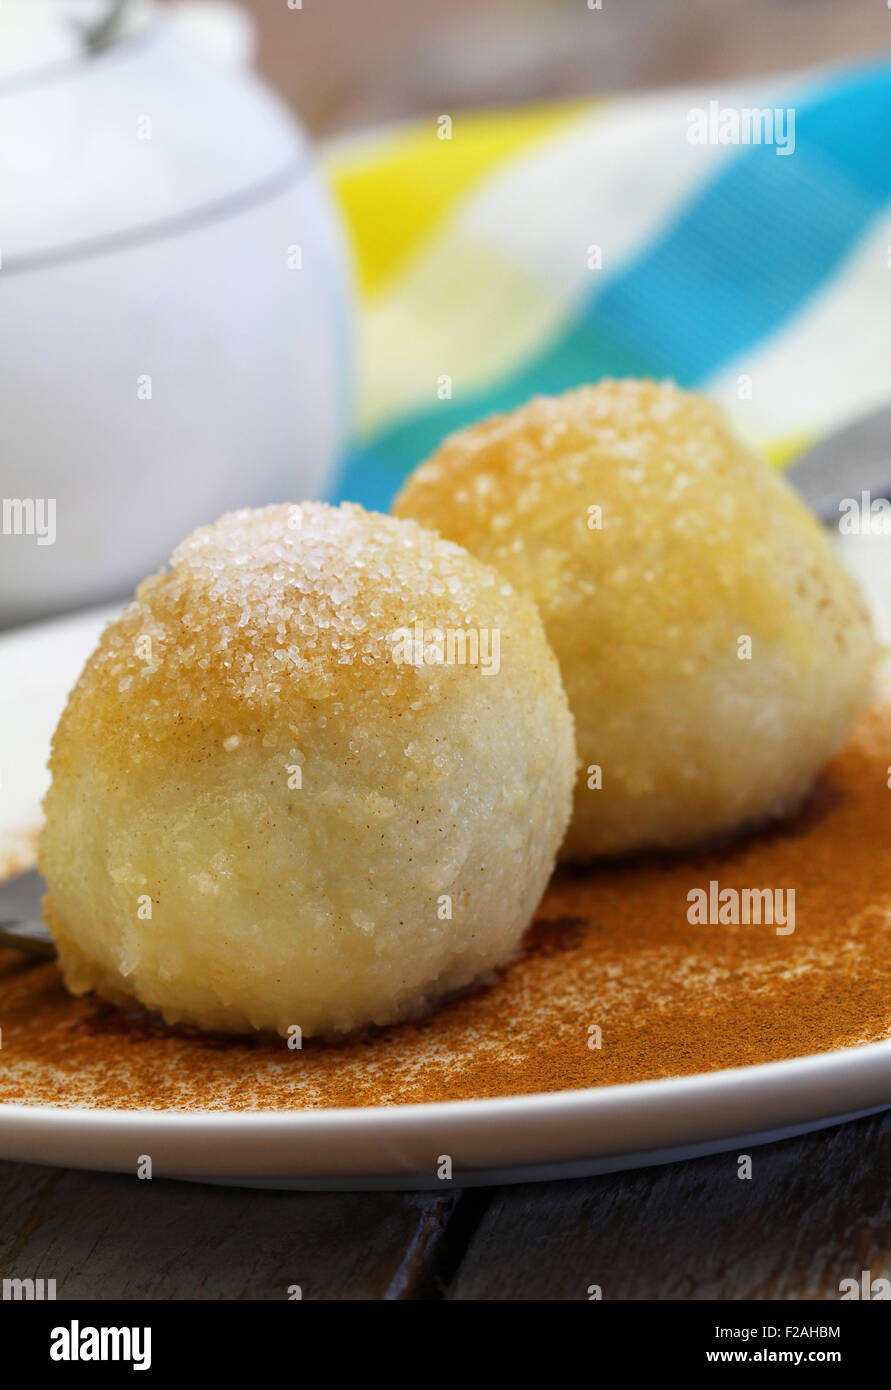 Fruit dumplings sprinkled with sugar and cinnamon, closeup Stock Photo